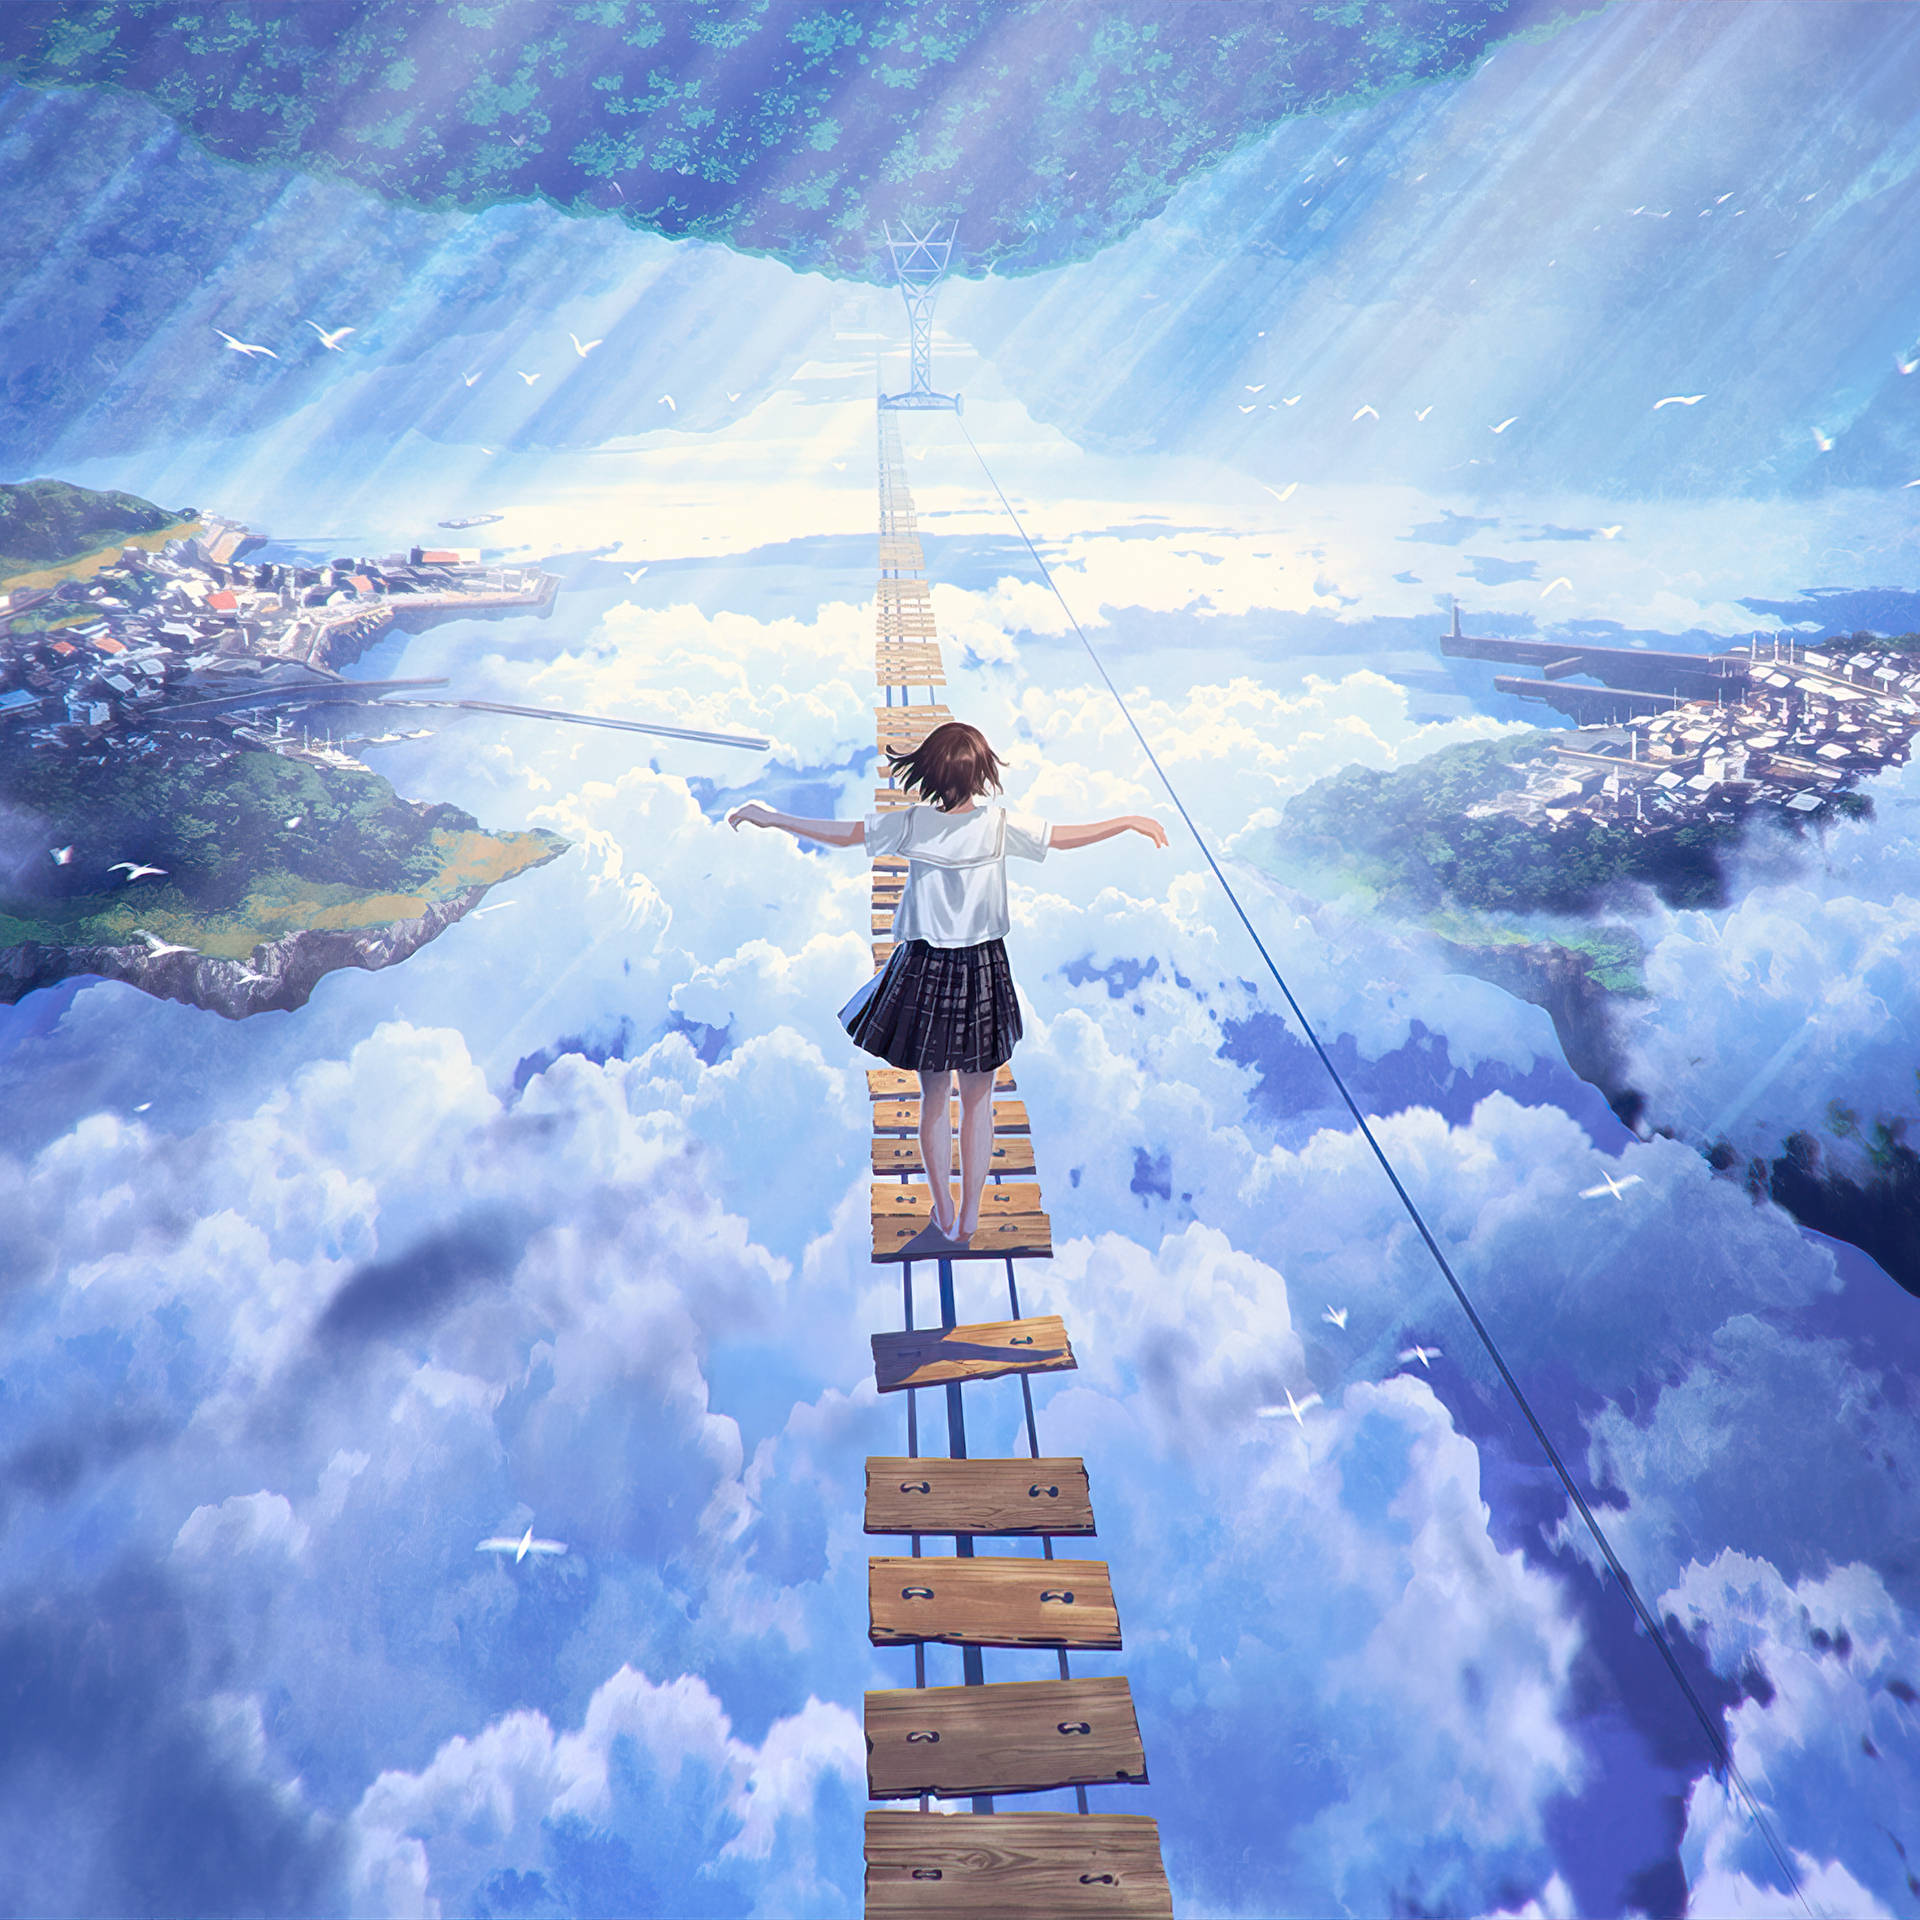 Anime IPad Girl Walking On Bridge Wallpaper